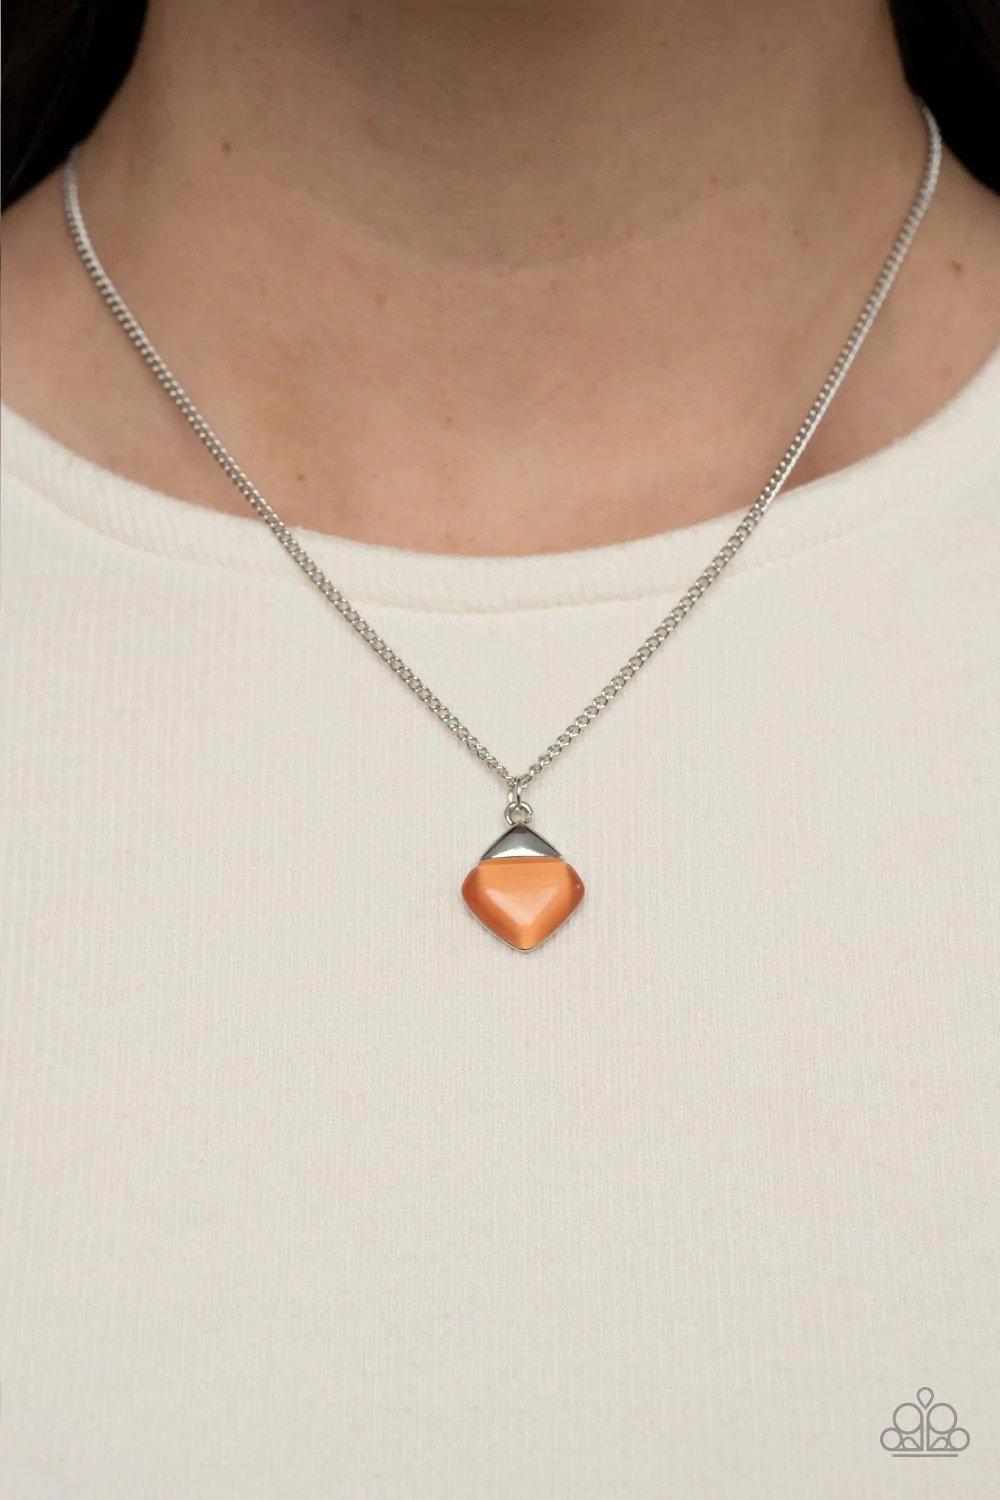 Gracefully Gemstone Orange Necklace - Paparazzi Accessories- on model - CarasShop.com - $5 Jewelry by Cara Jewels